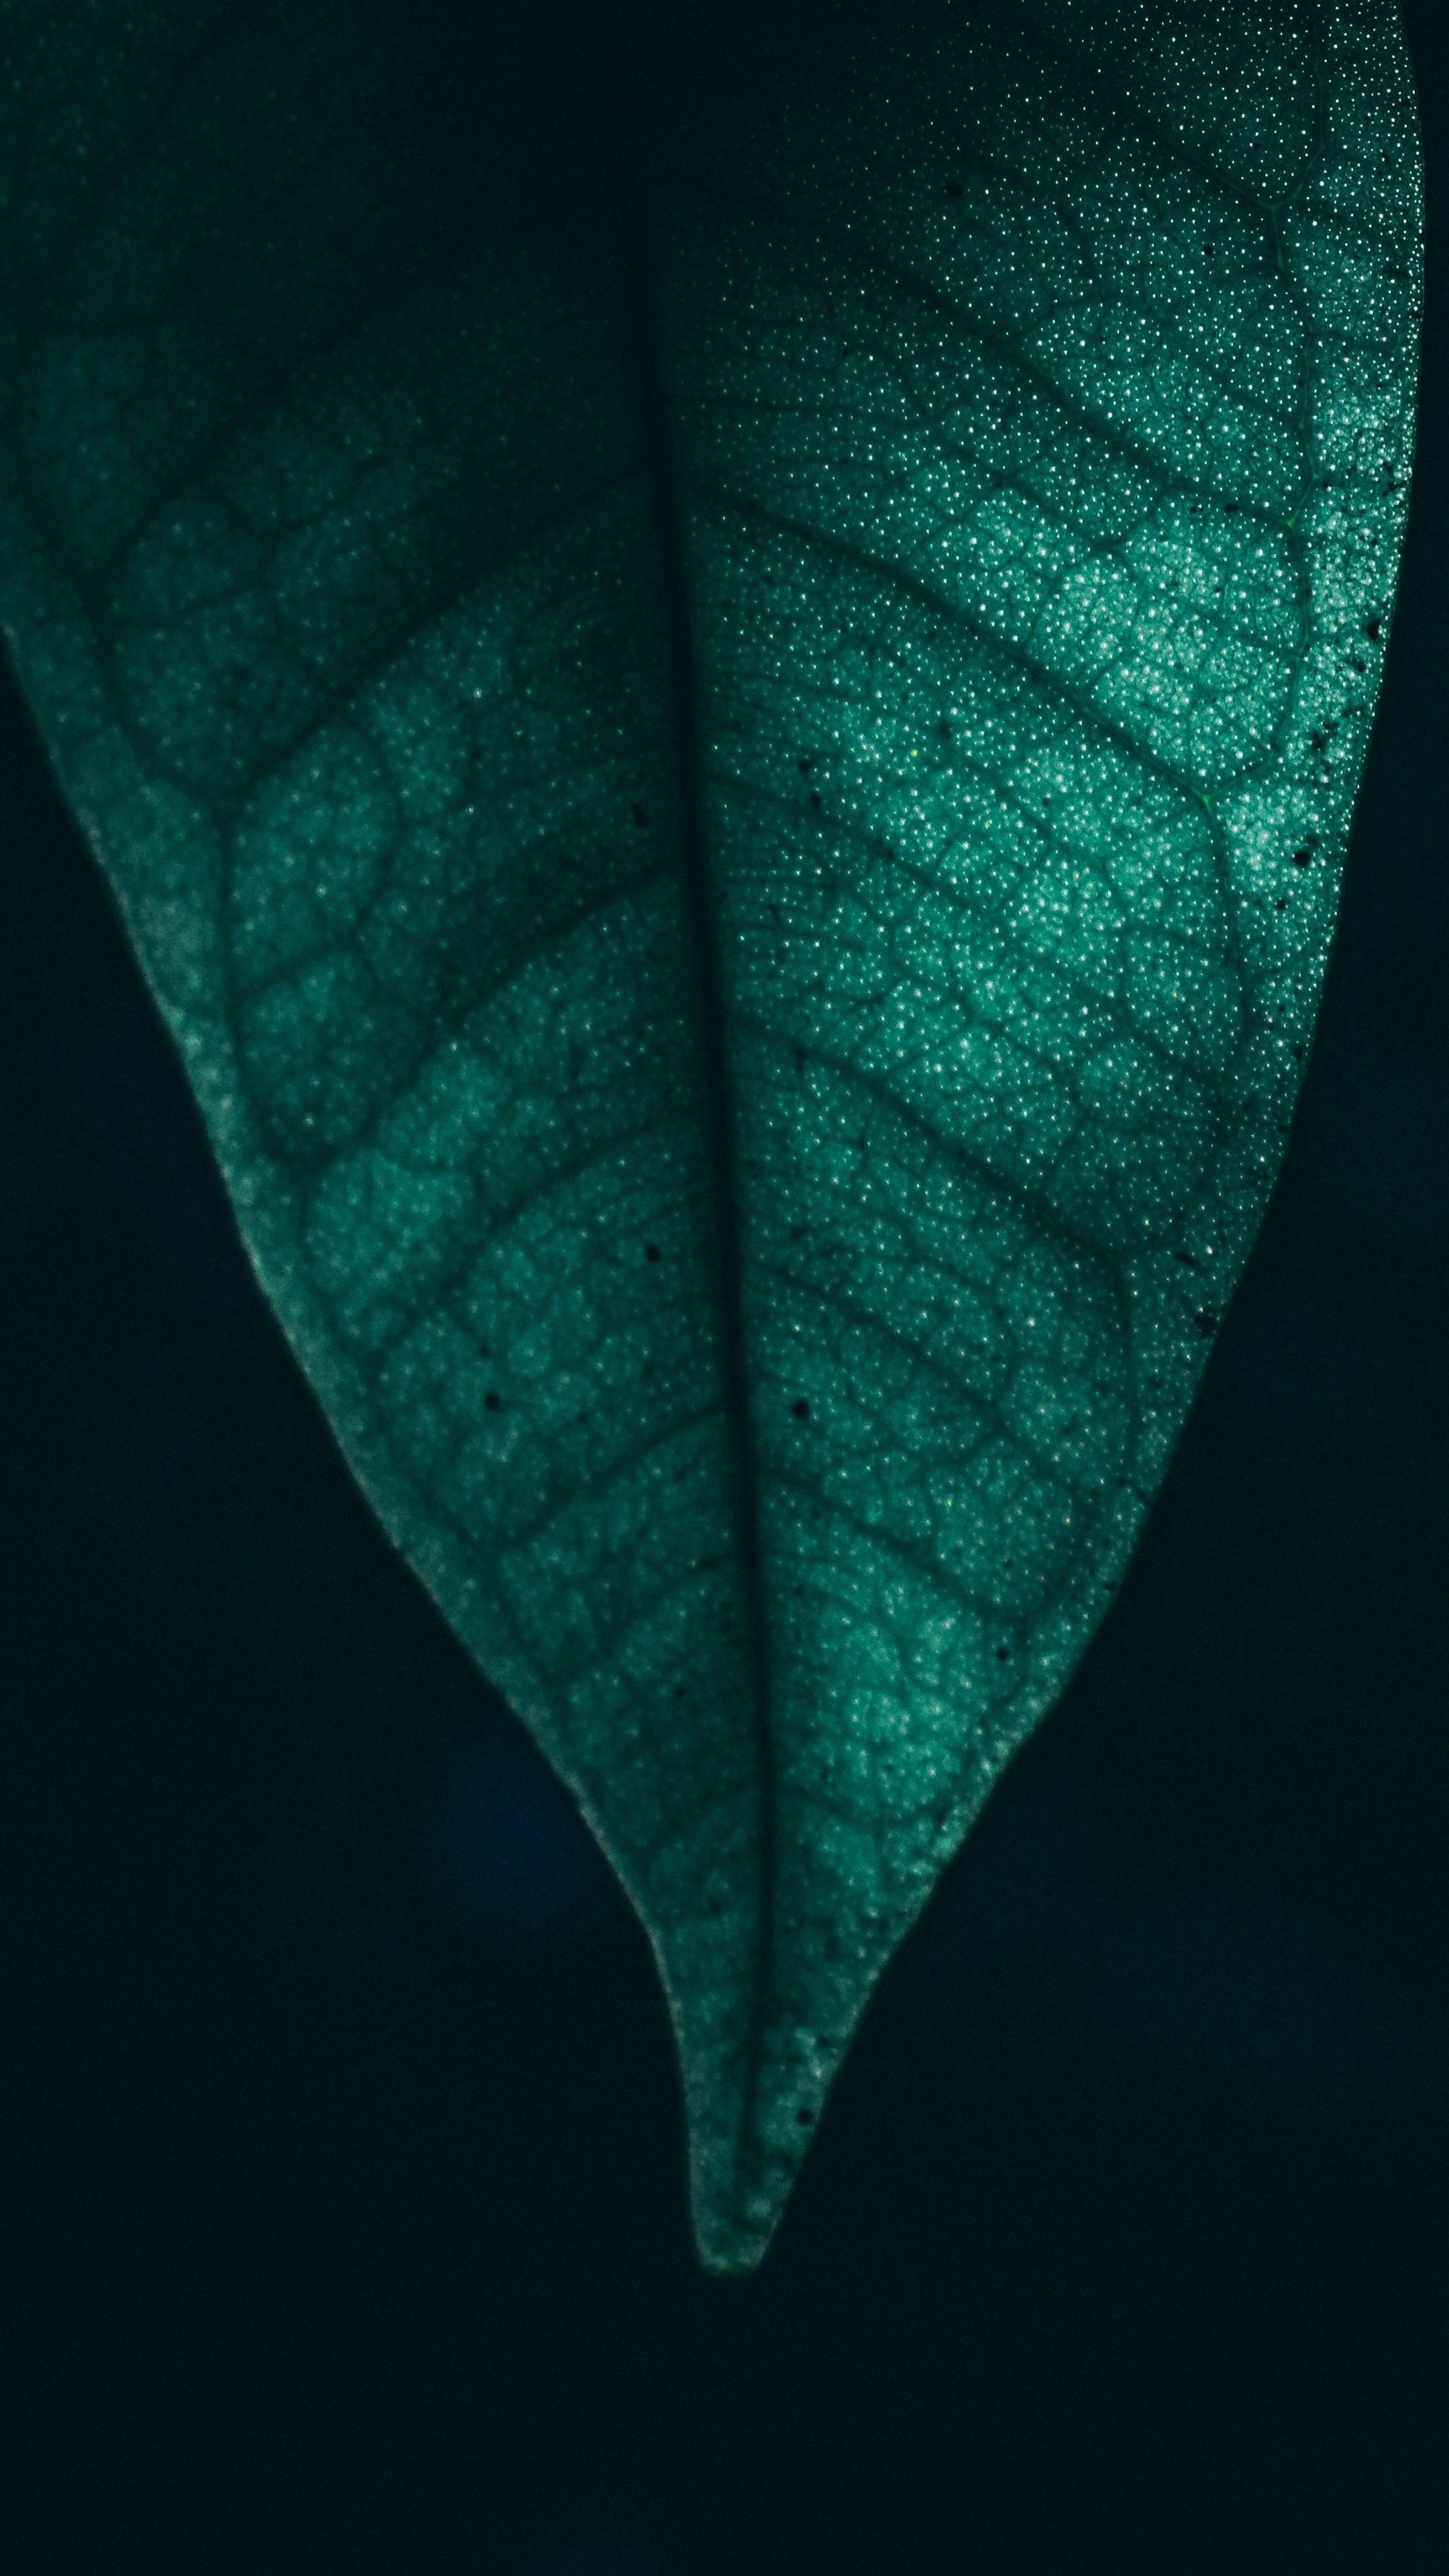 Nature #Green Leaf Macro 4k #wallpaper HD 4k background for android :).k background, Leaves wallpaper iphone, Android wallpaper